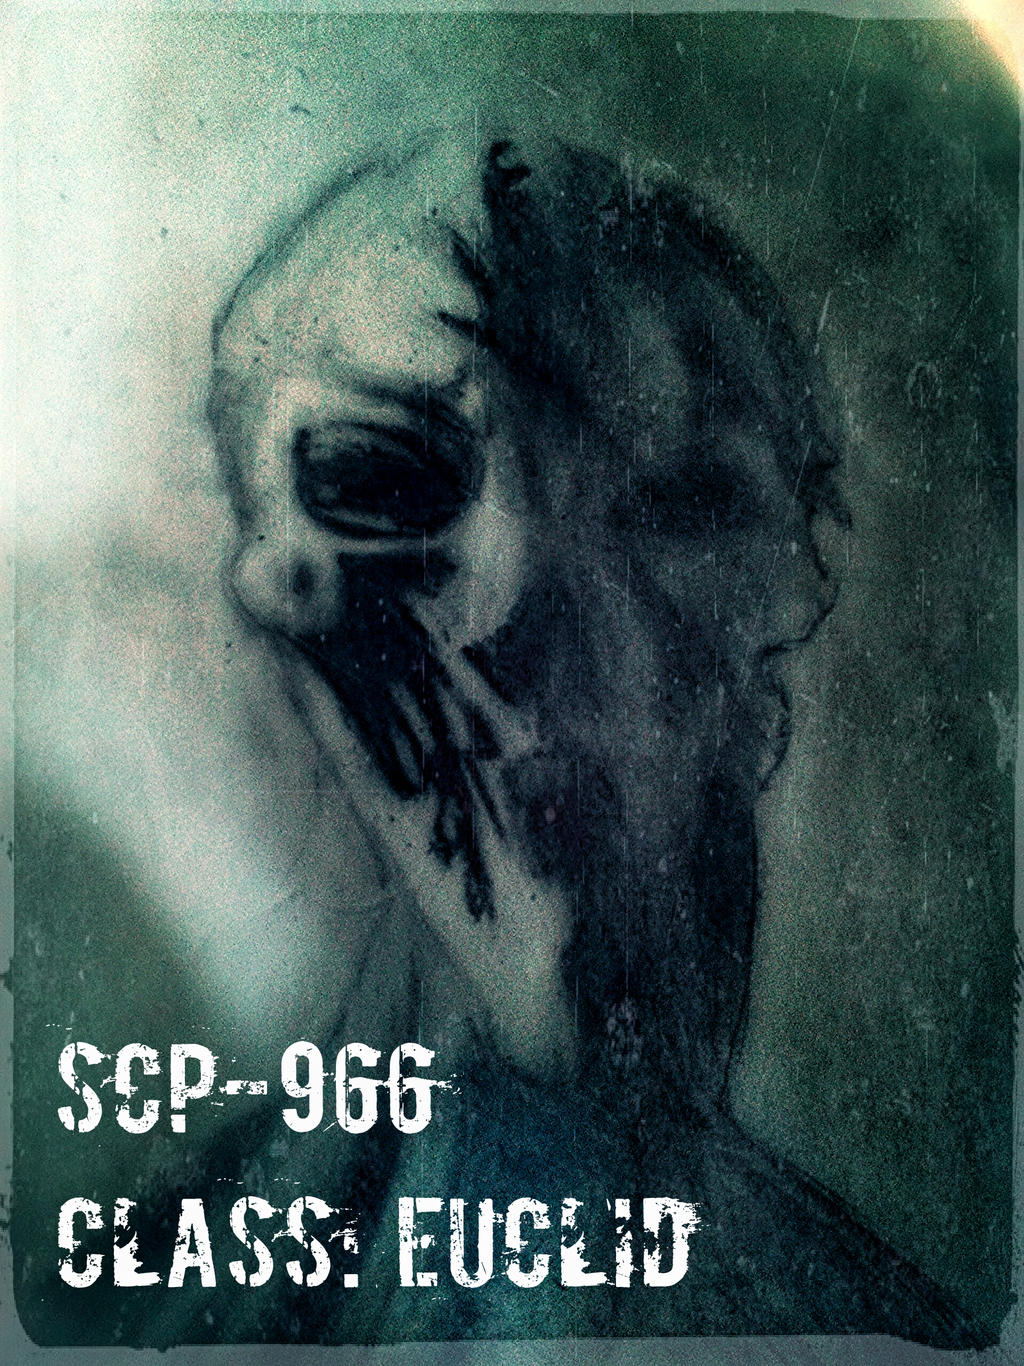 SCP-966 (9 of Spades) by SushiBabyQueen on DeviantArt